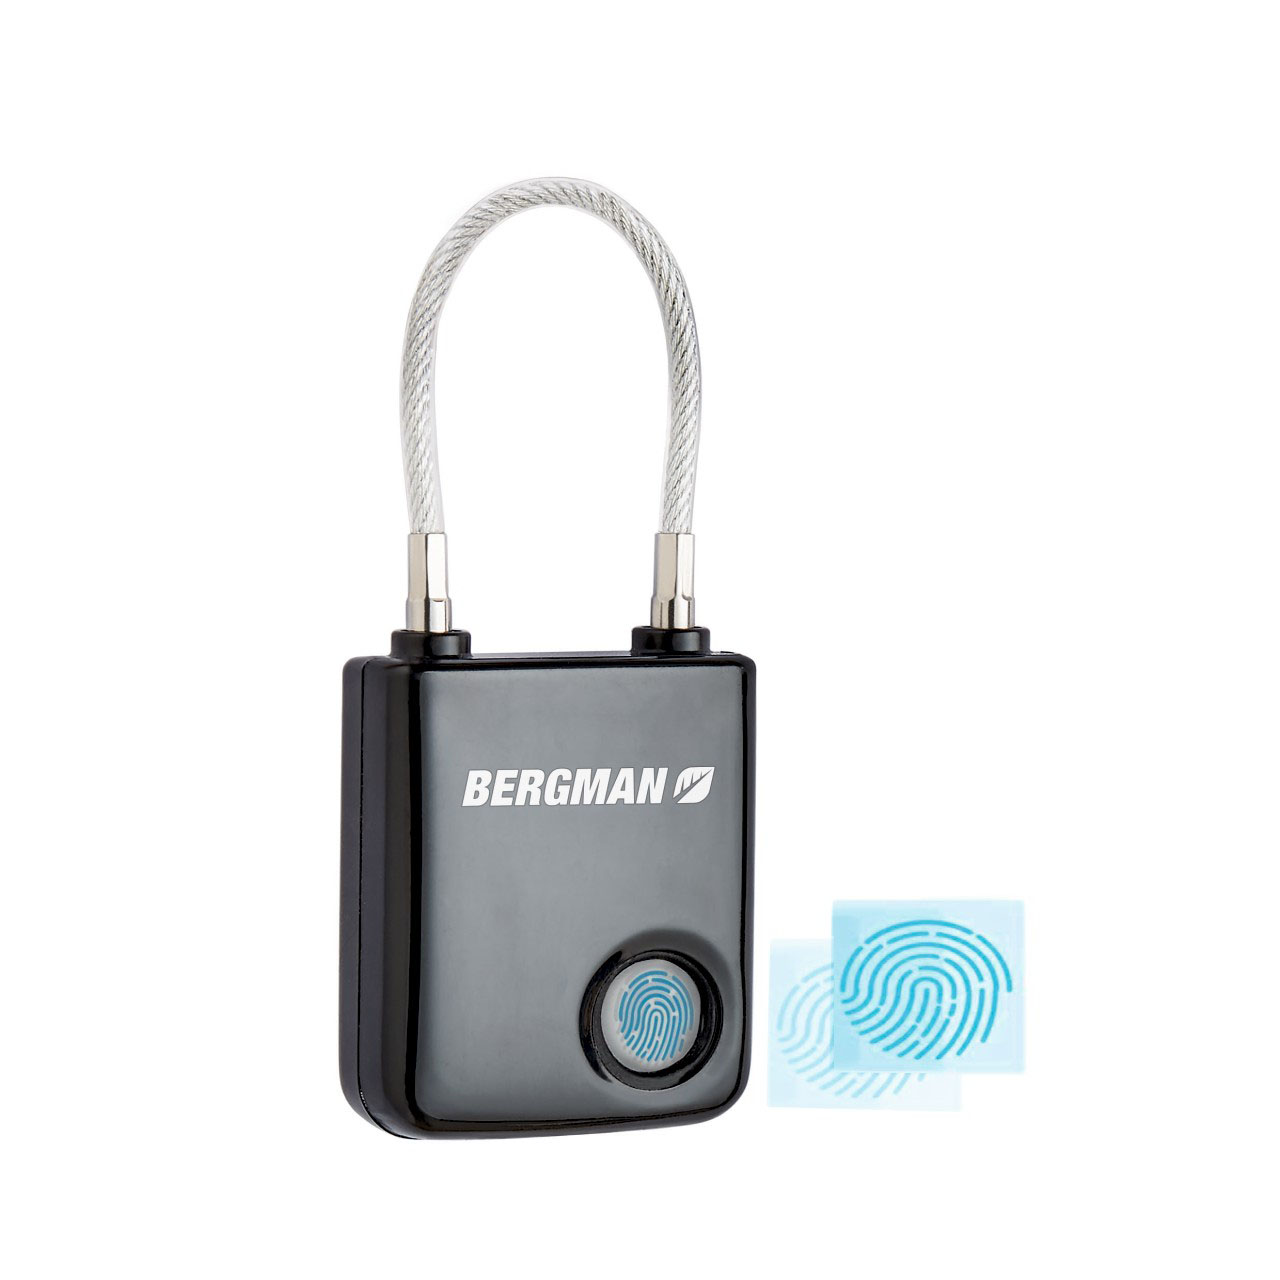 Bergman® Fingerprint Operated Security Padlock